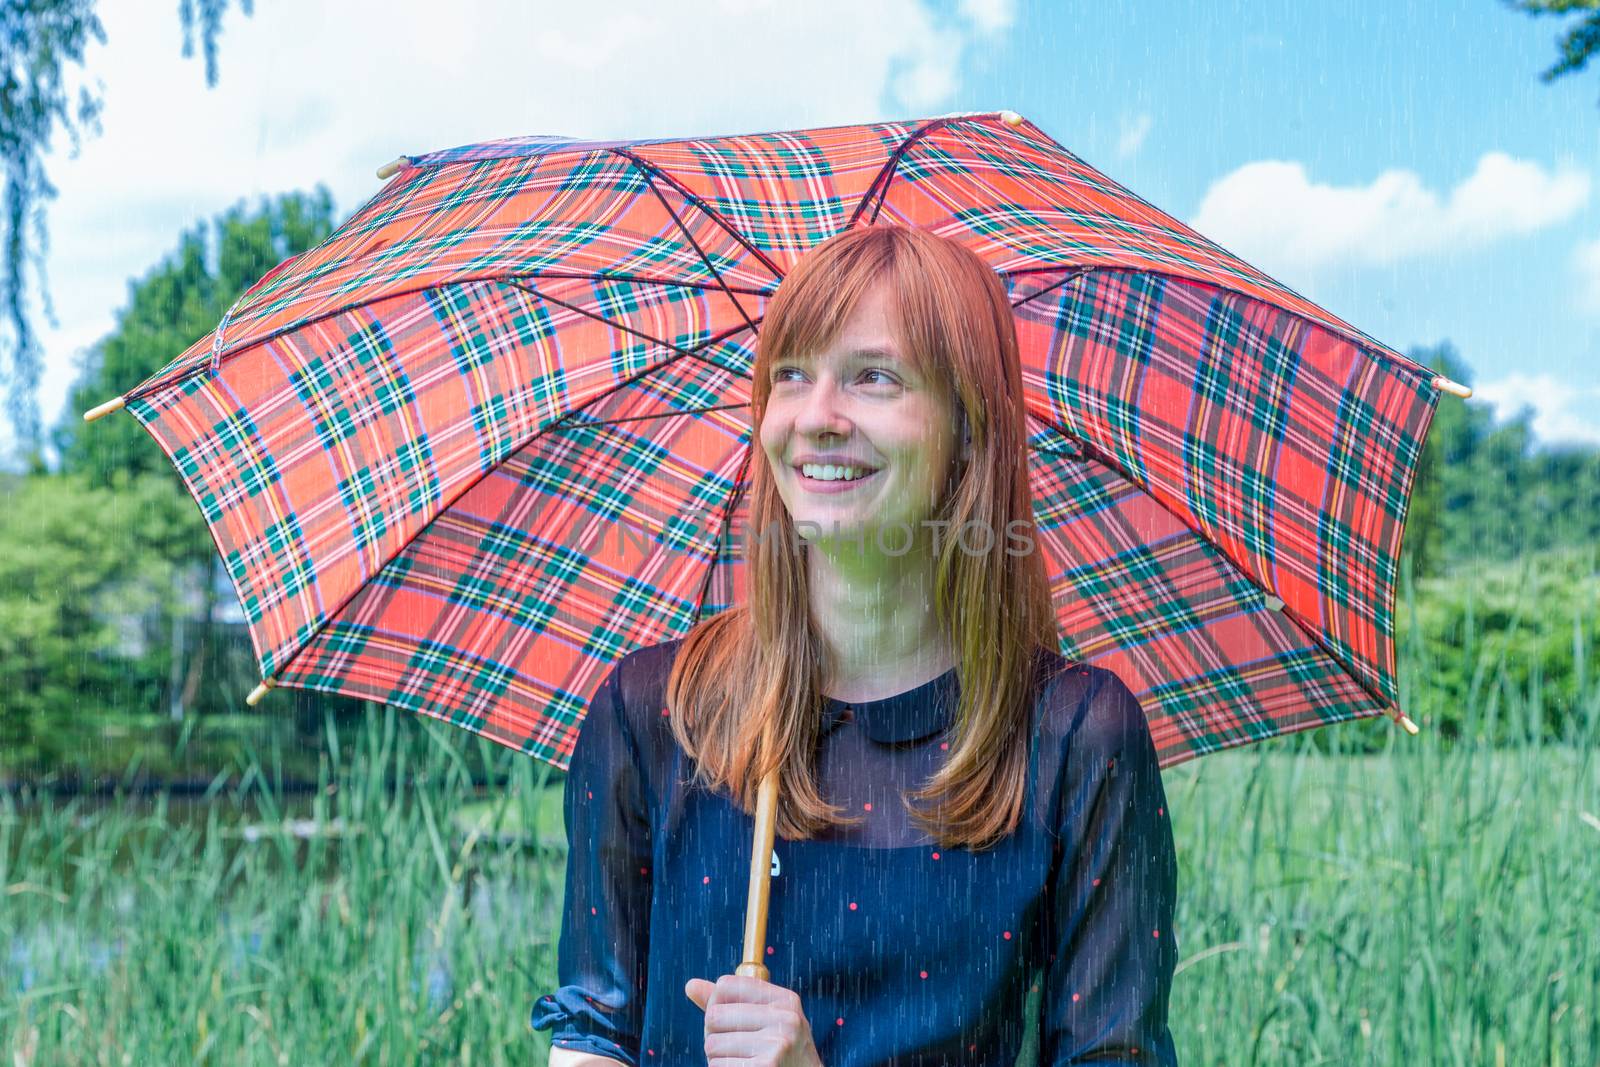 Girl with rain under umbrella in nature by BenSchonewille